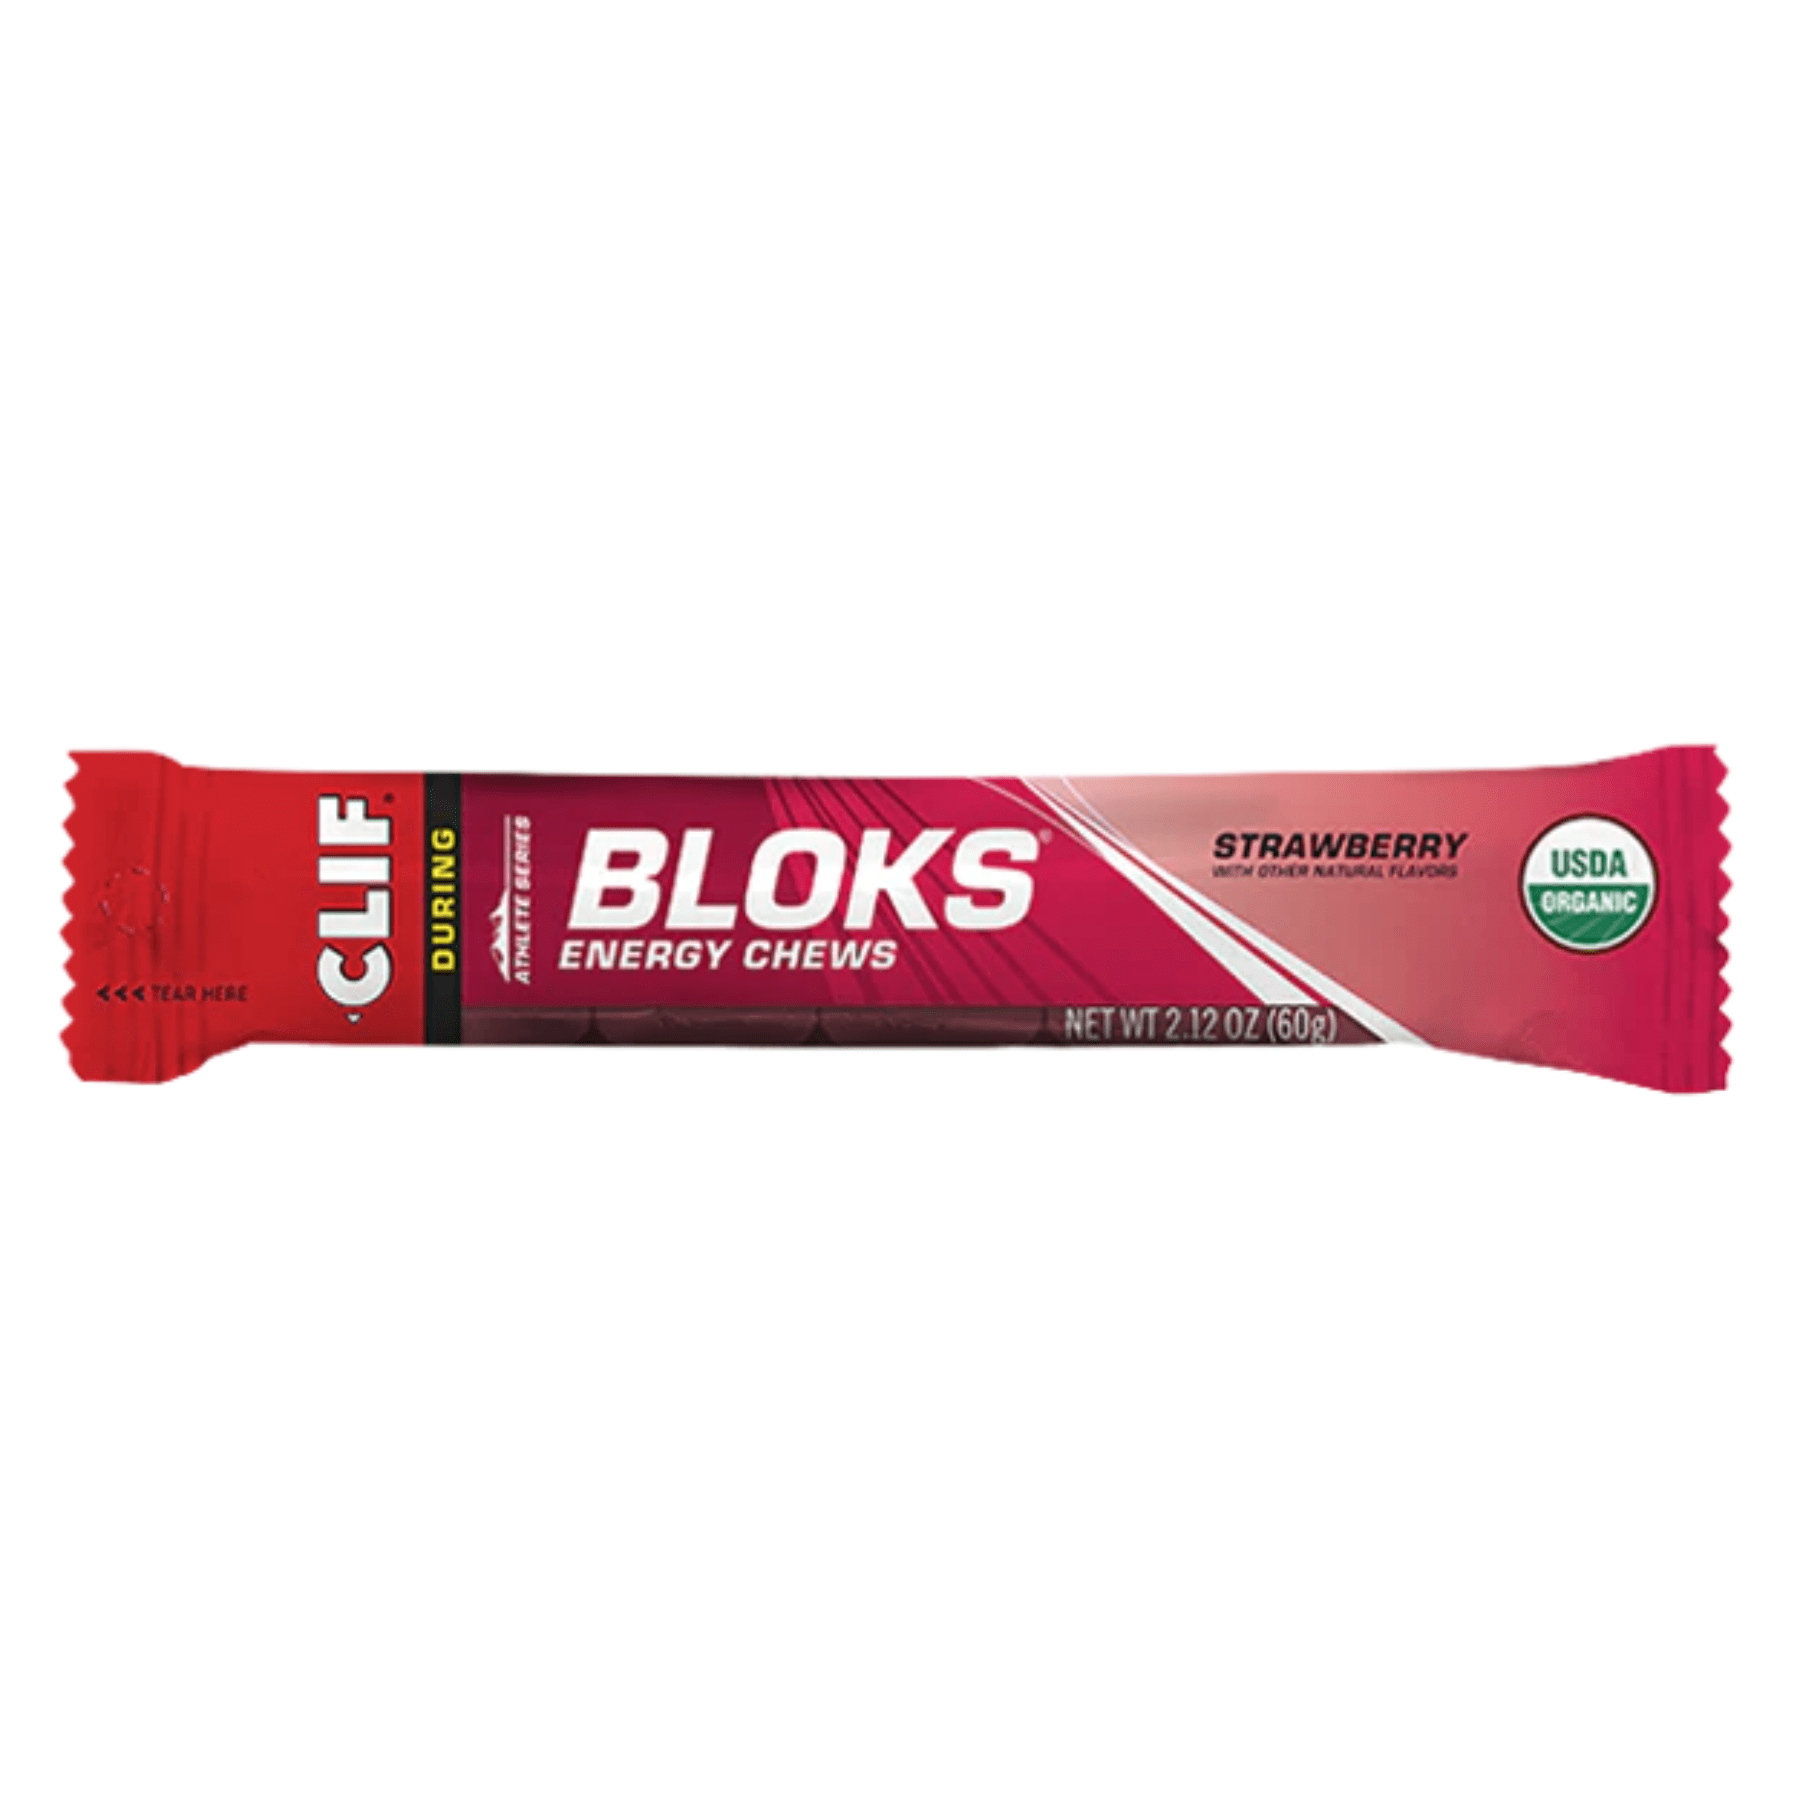 clif Energy Chews 1 / Strawberry BLOKS Energy Chews CLIF531